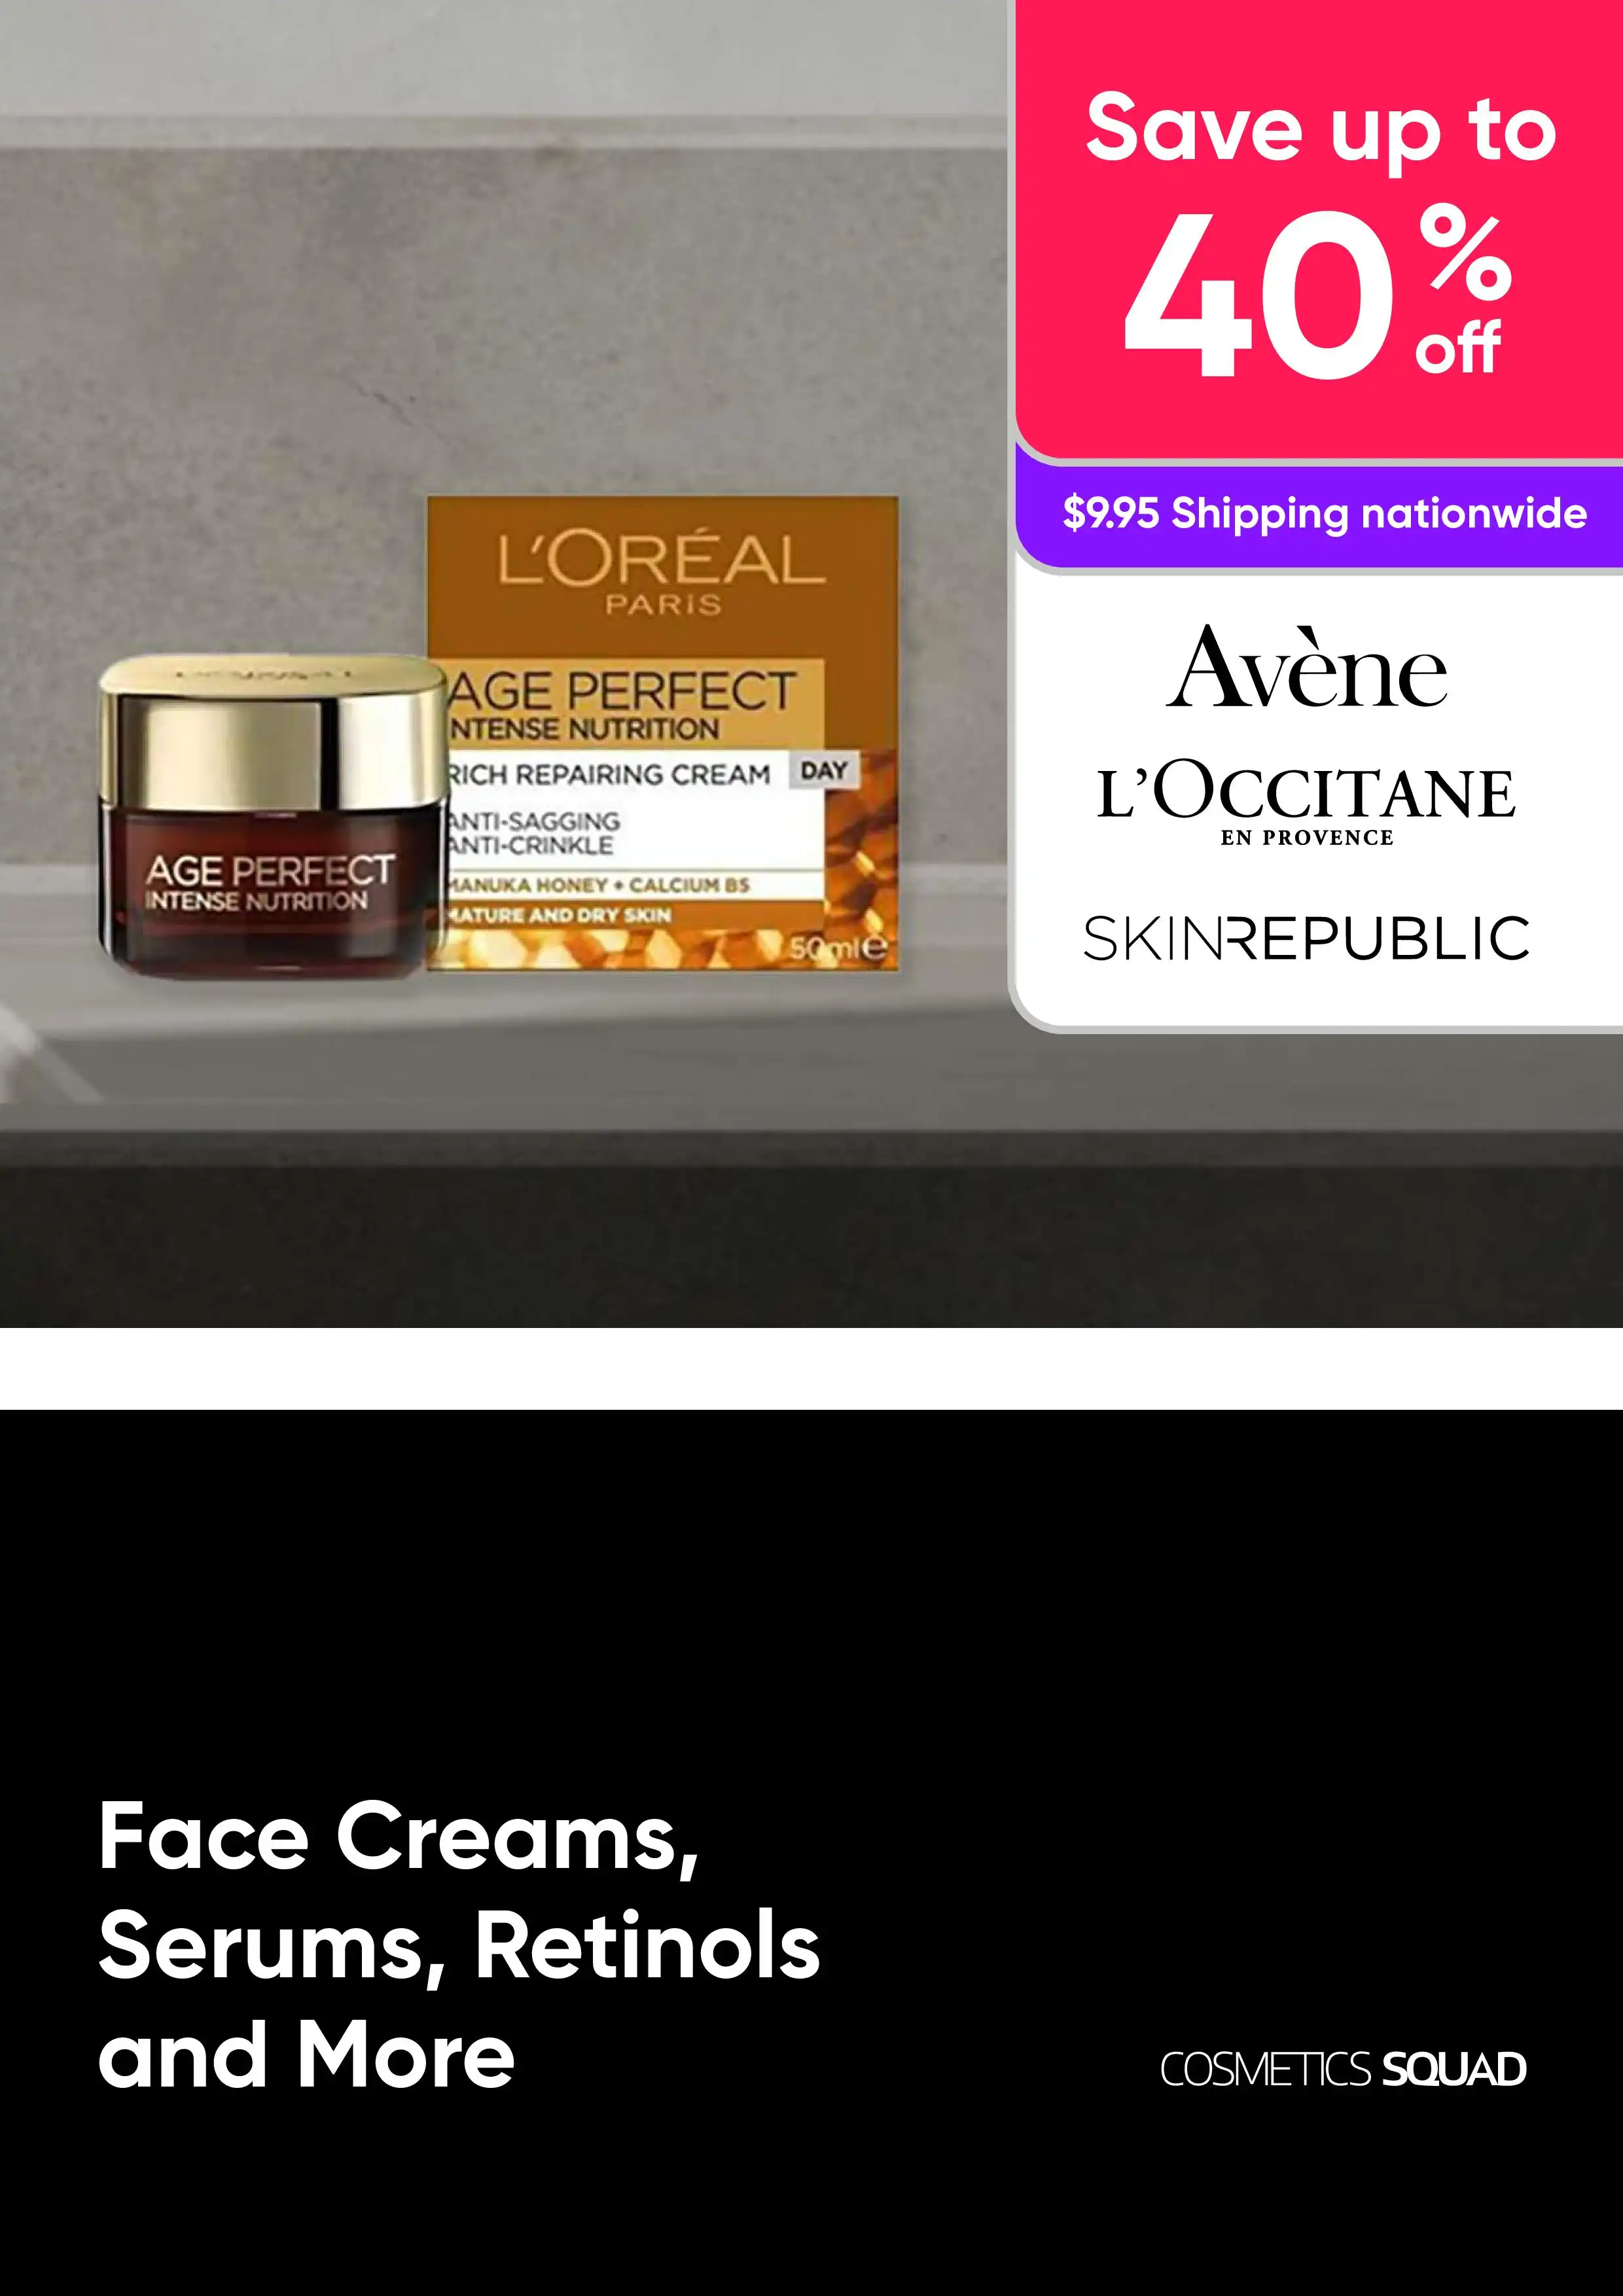 Skincare Specials - Face Creams, Serums, Retinols and More - Avene, L'Occitane - Deals from $8.99